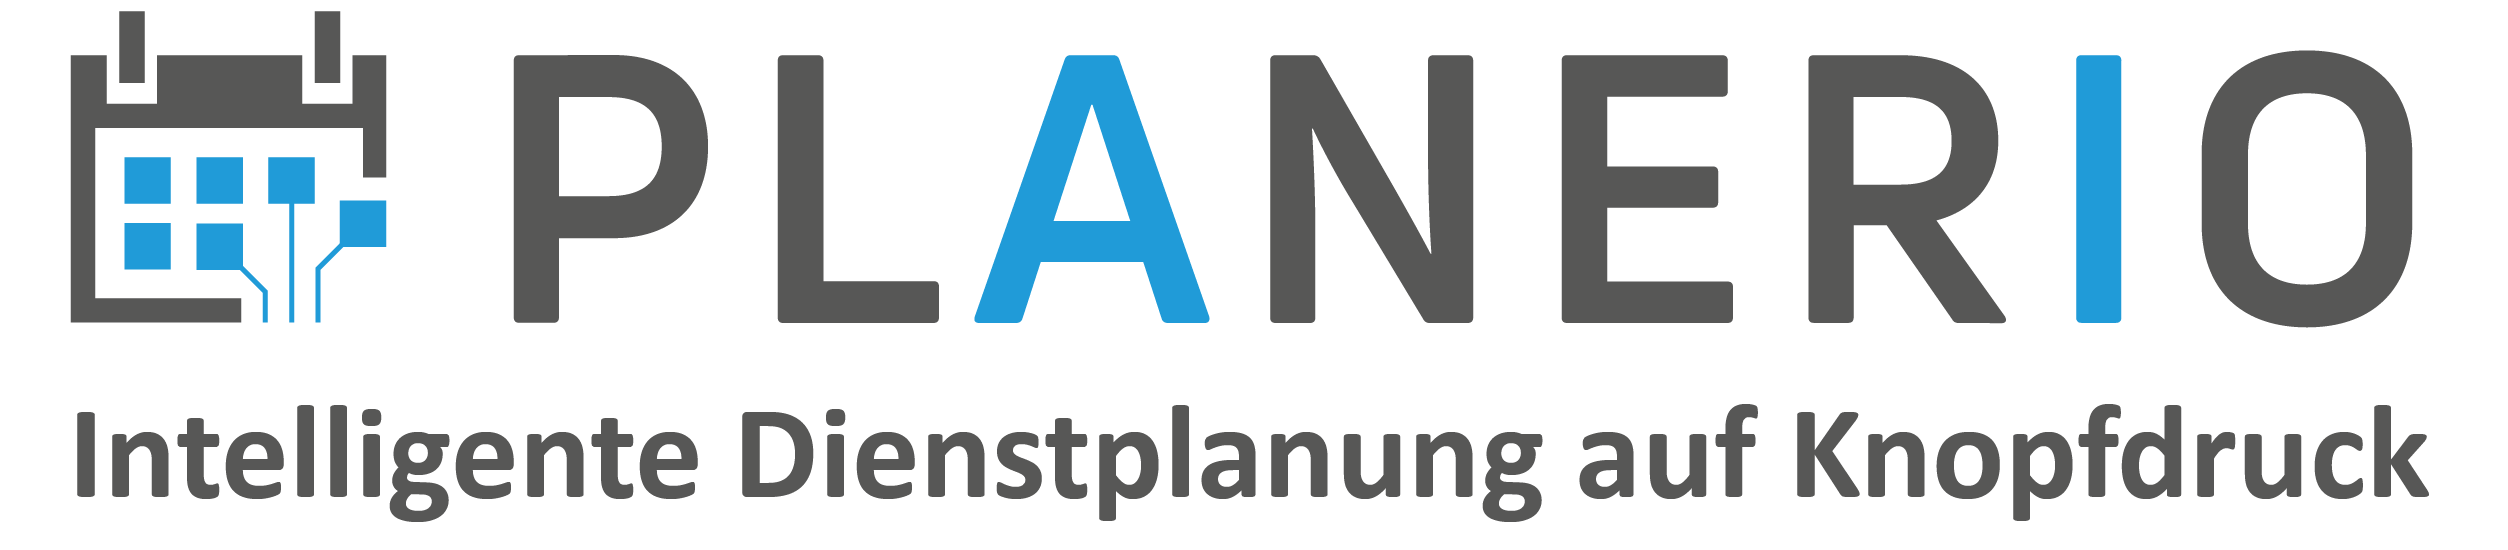 Planerio GmbH Logo